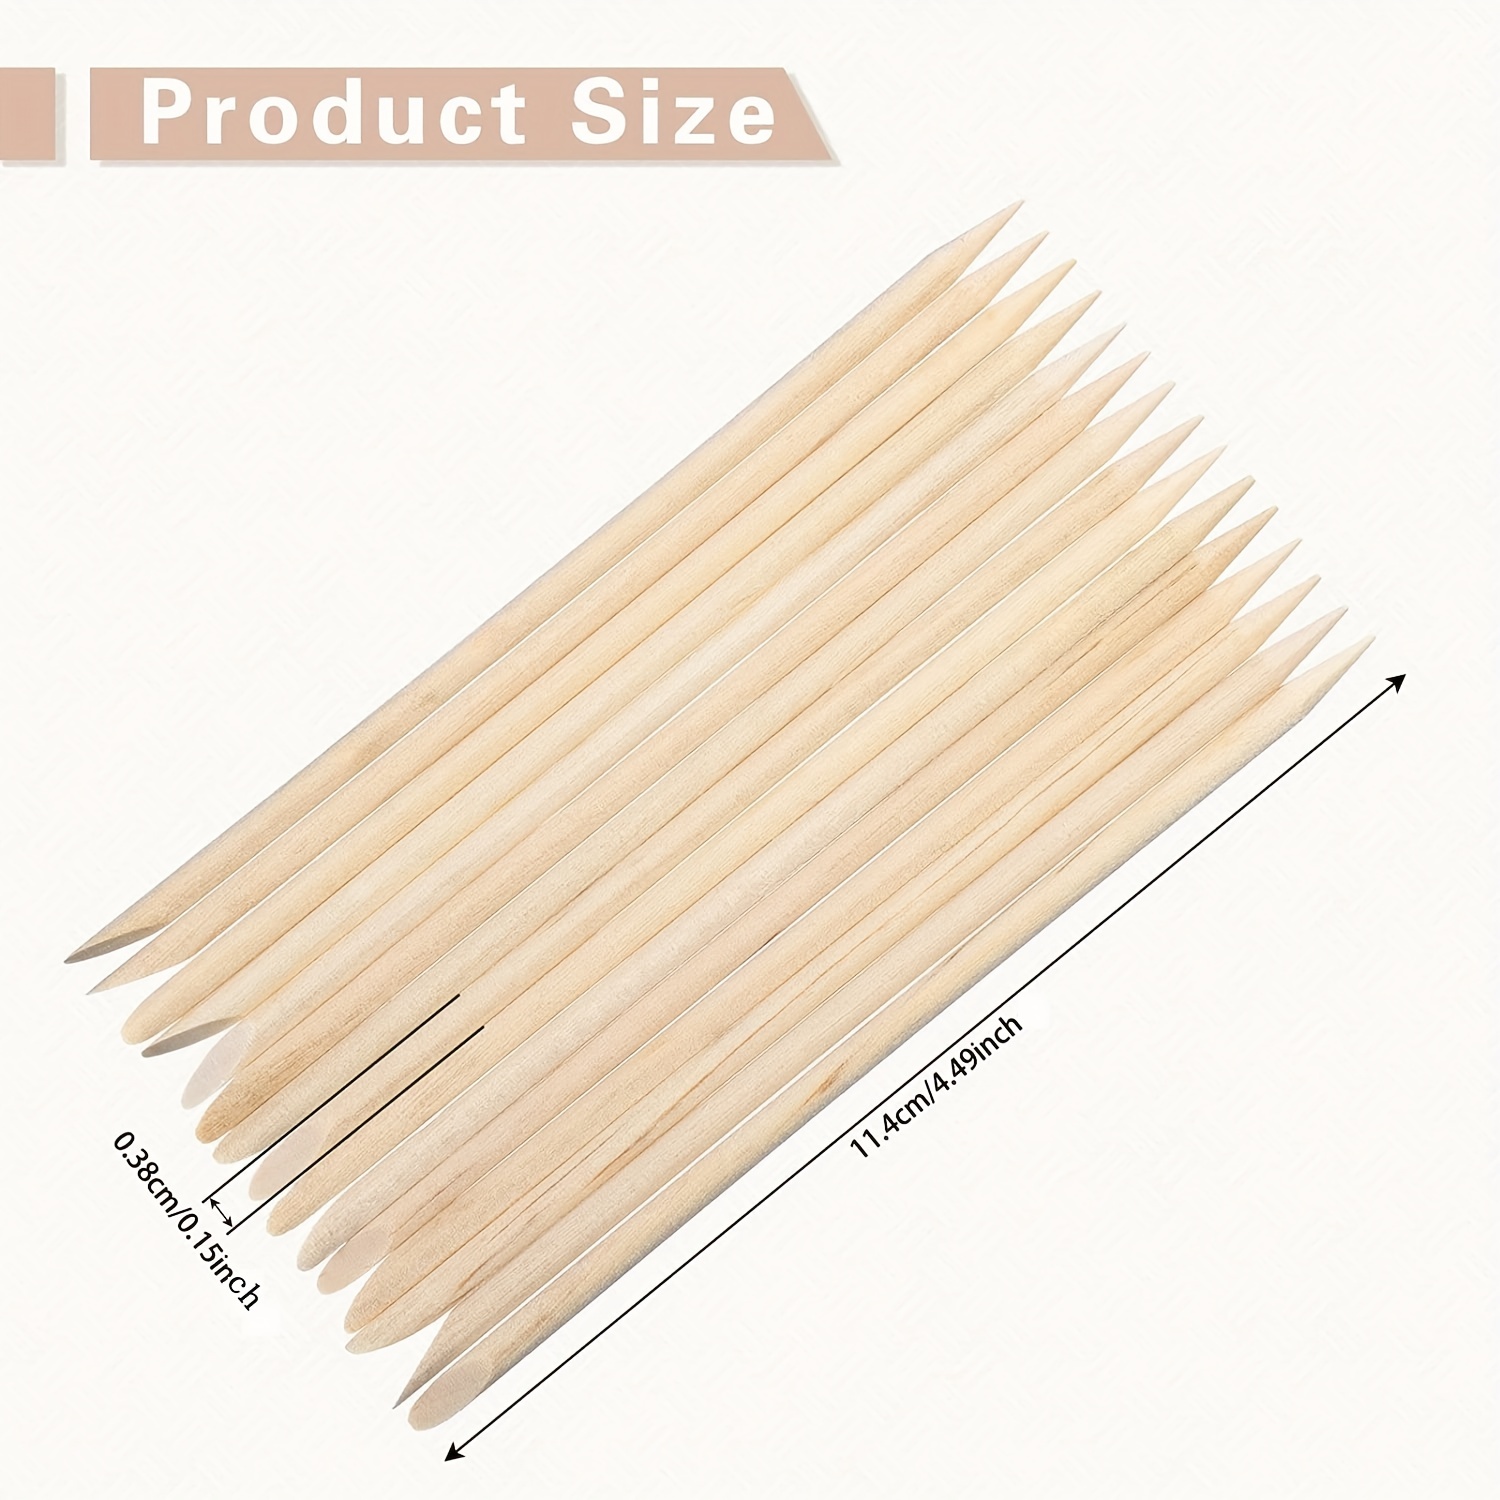 200 Pcs Wooden Wax Sticks Eyebrow Waxing Sticks Small Wood Wax Applicator  Sticks